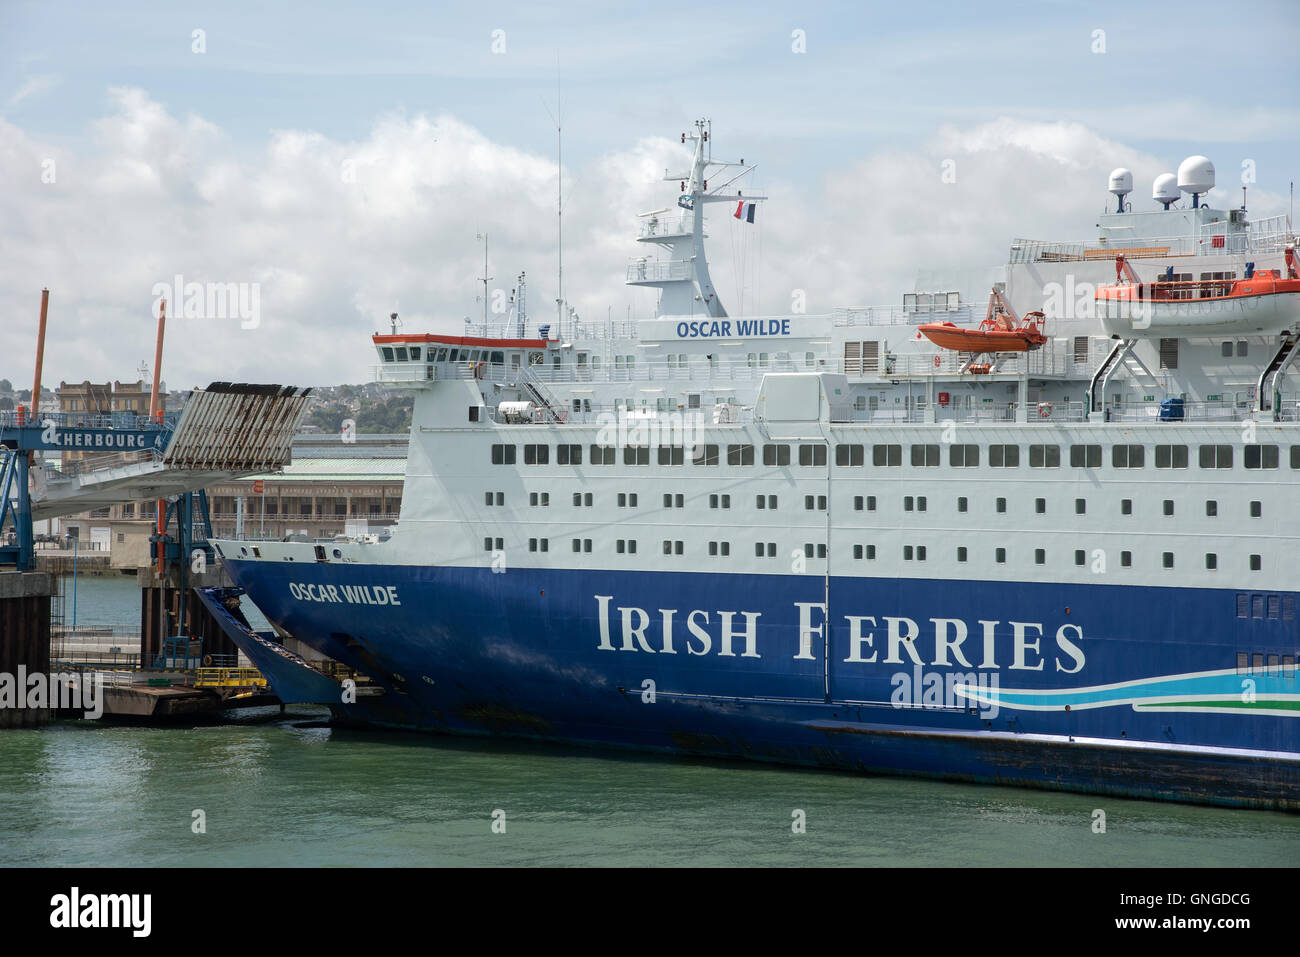 Irish Ferries vessel Oscar Wilde alongside in Cherbourg Harbour northern France Stock Photo